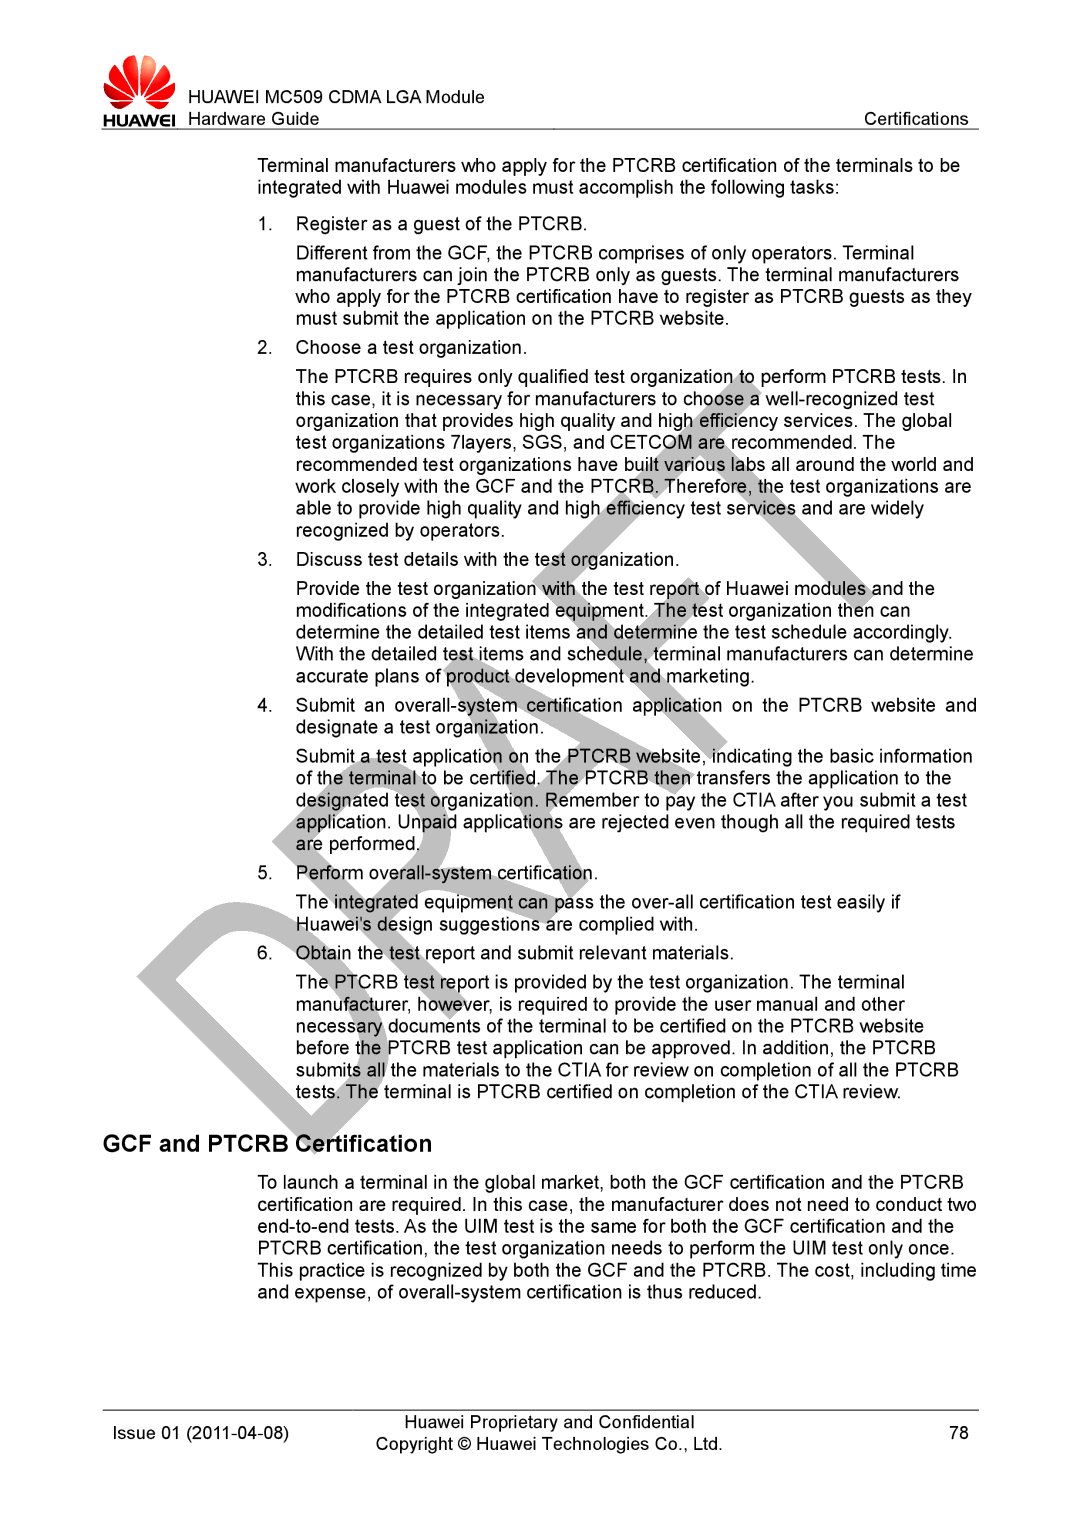 Huawei MC509 CDMA LGA manual GCF and Ptcrb Certification 